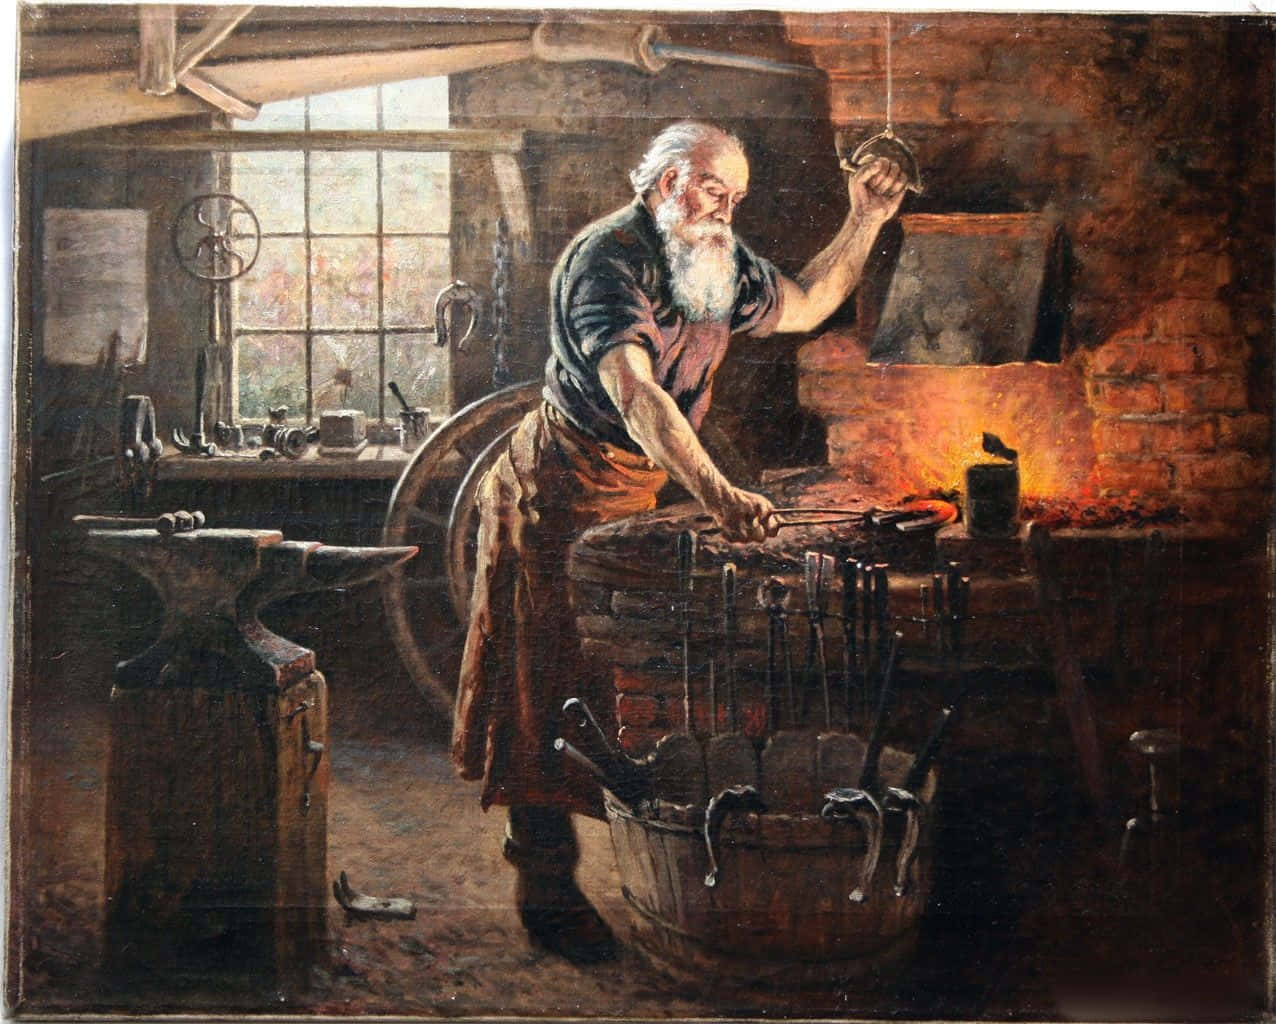 A master blacksmith constructs a sword. Wallpaper